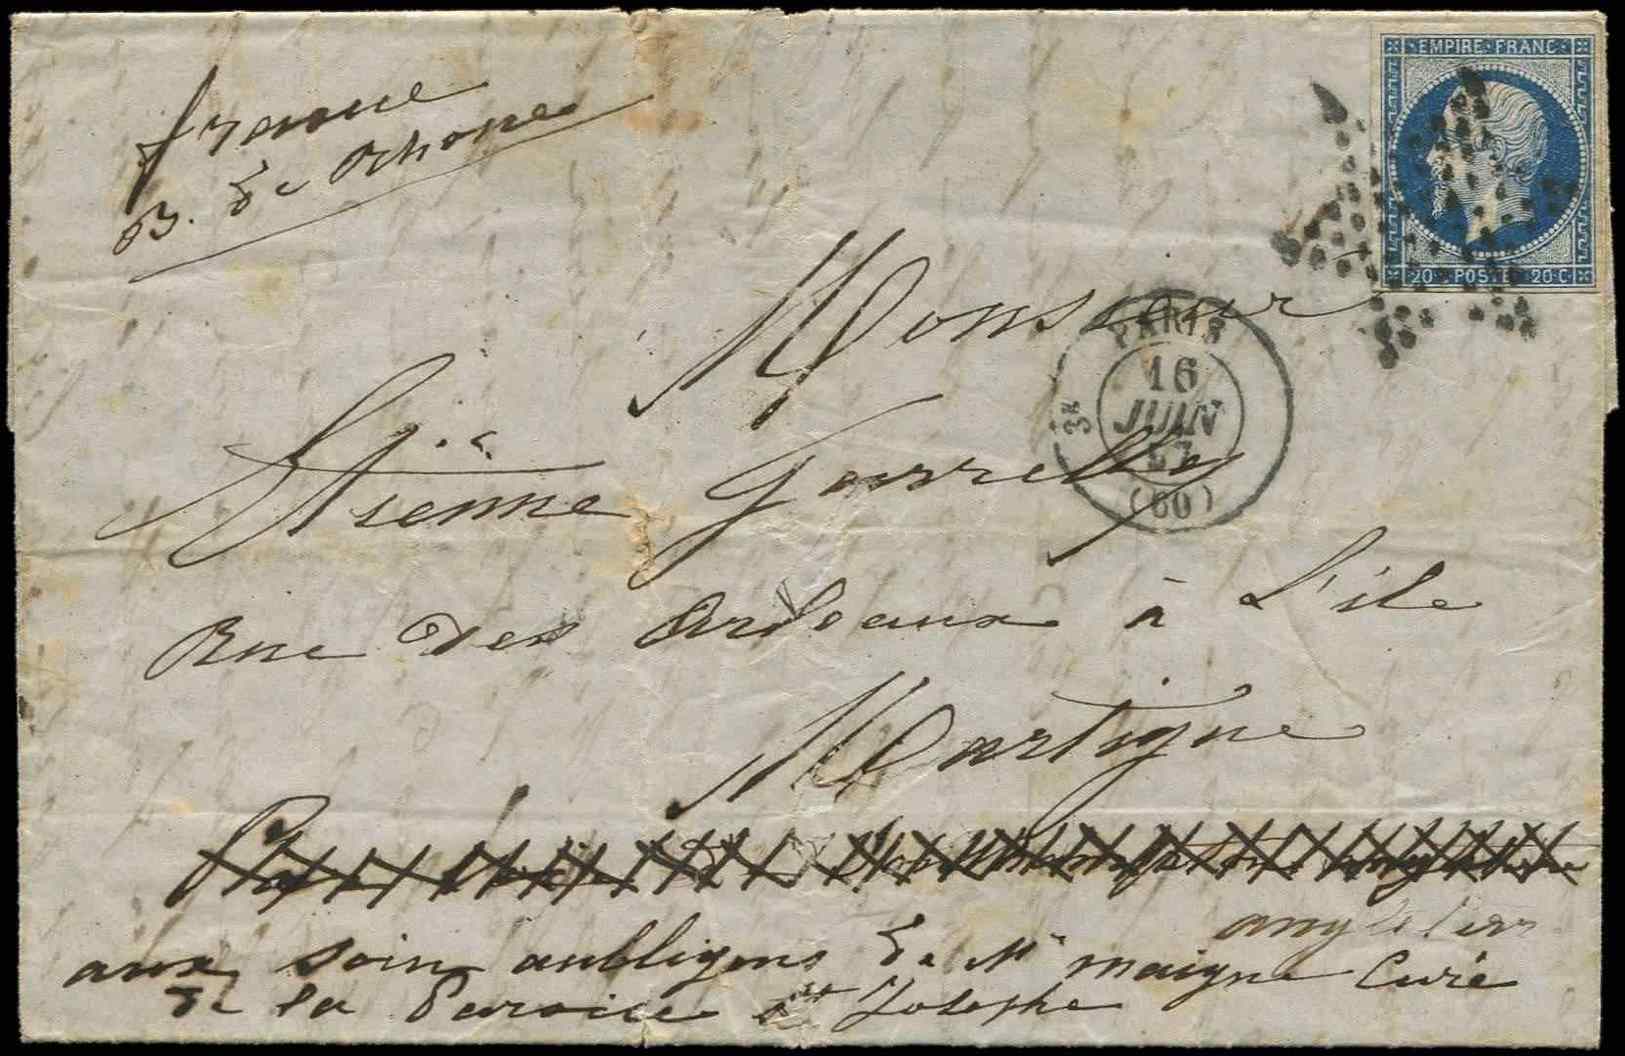 Let EMPIRE NON DENTELE - Let  14A  20c. Bleu, T I, Obl. Etoile S. LAC De St JOSE (Costa Rica), 1/4/57, Long Texte Très I - 1853-1860 Napoléon III